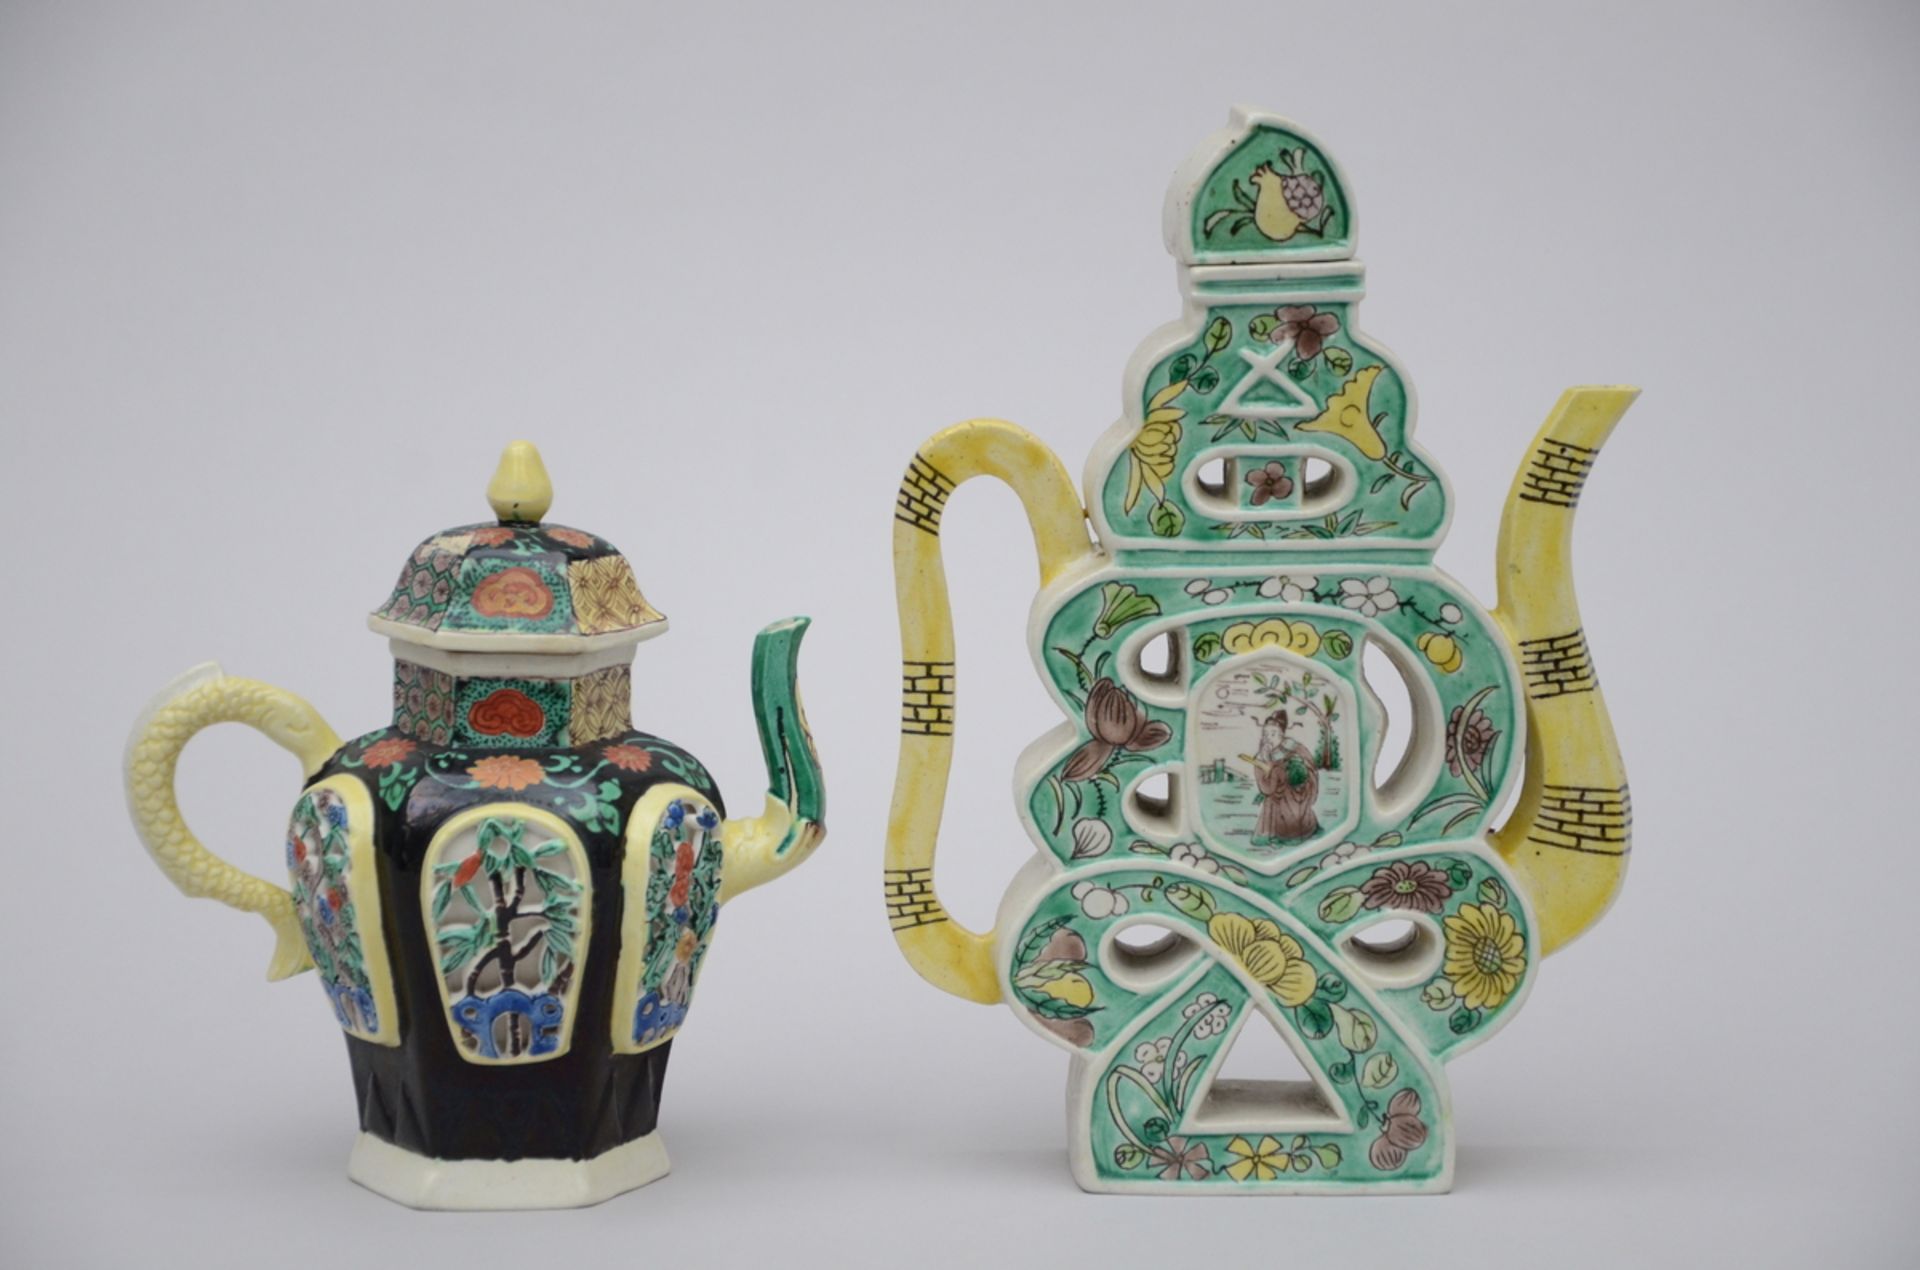 2 famille verte teapots in Chinese porcelain (H16.5 - 24cm) (*)